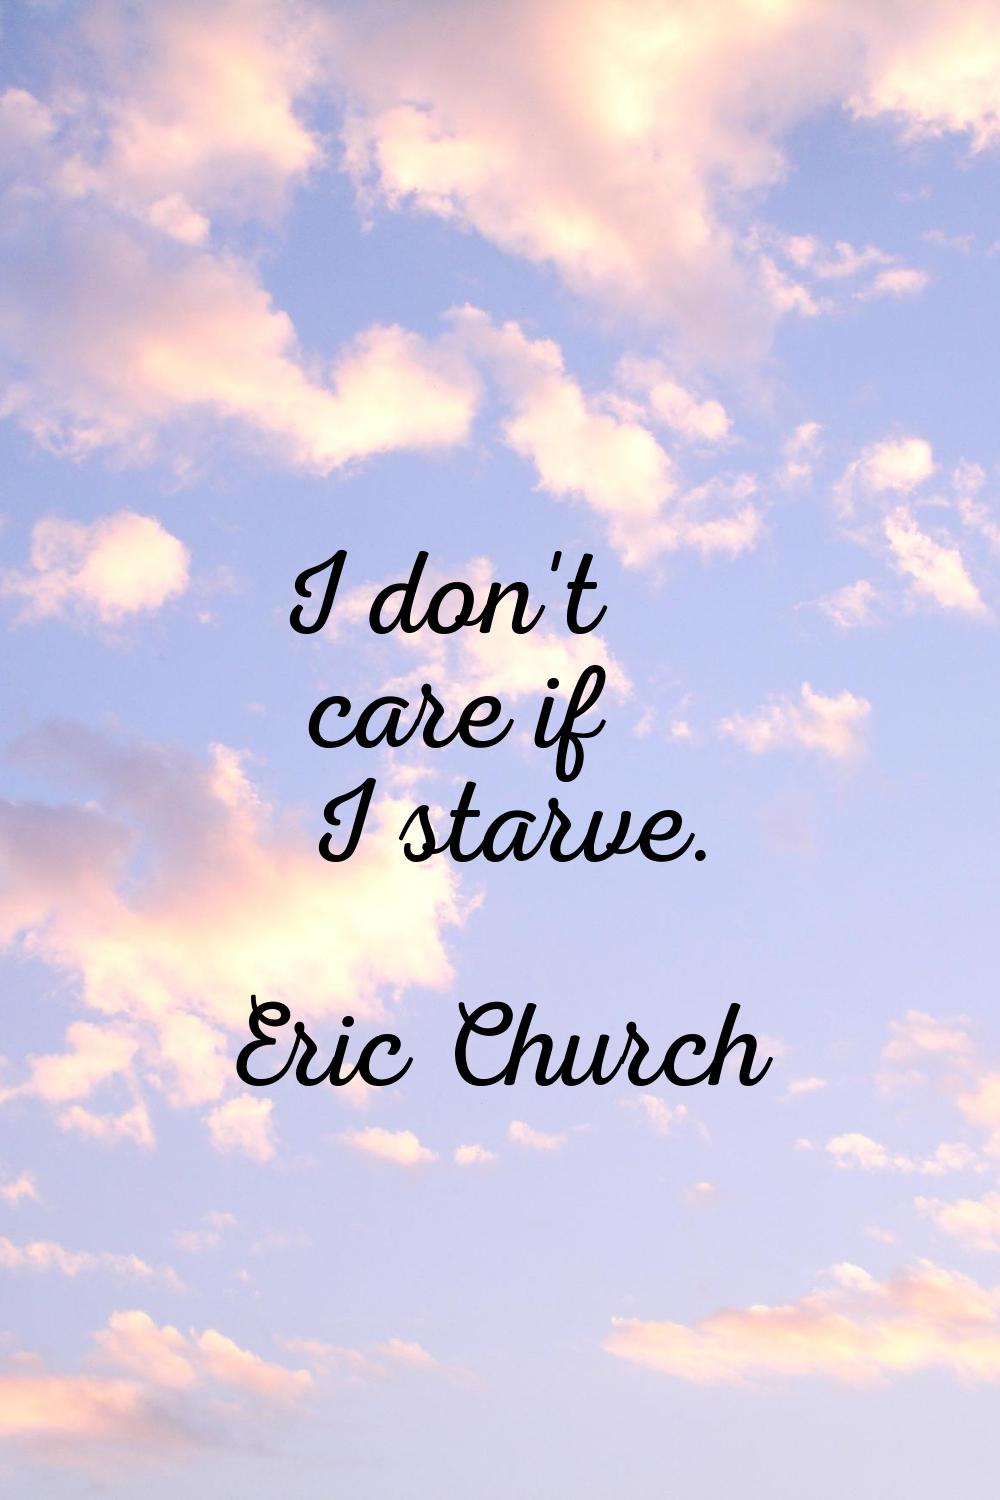 I don't care if I starve.